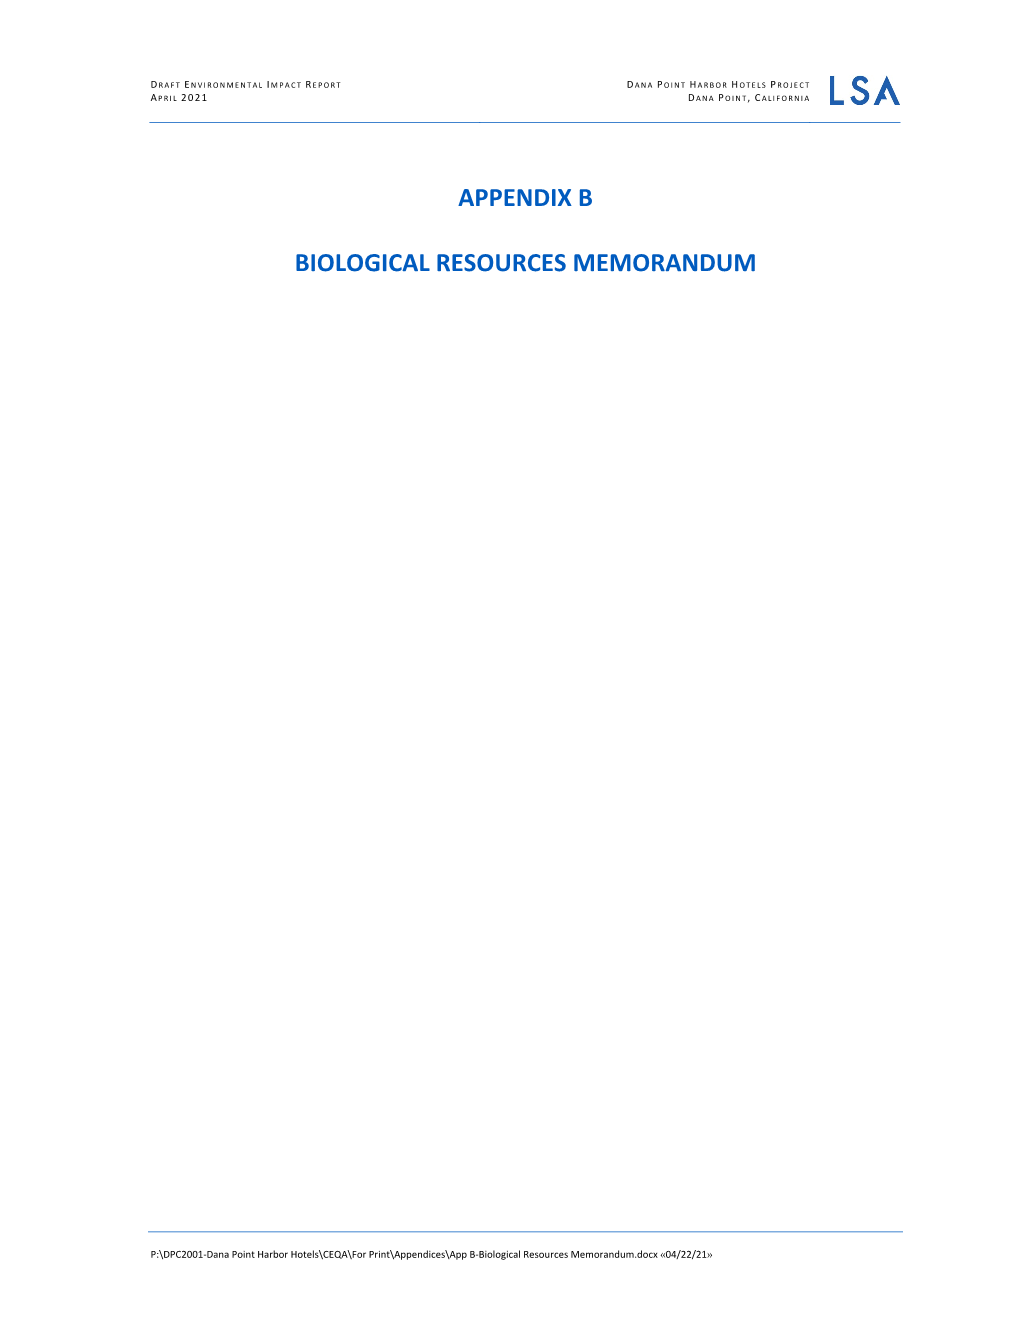 Appendix B Biological Resources Memorandum